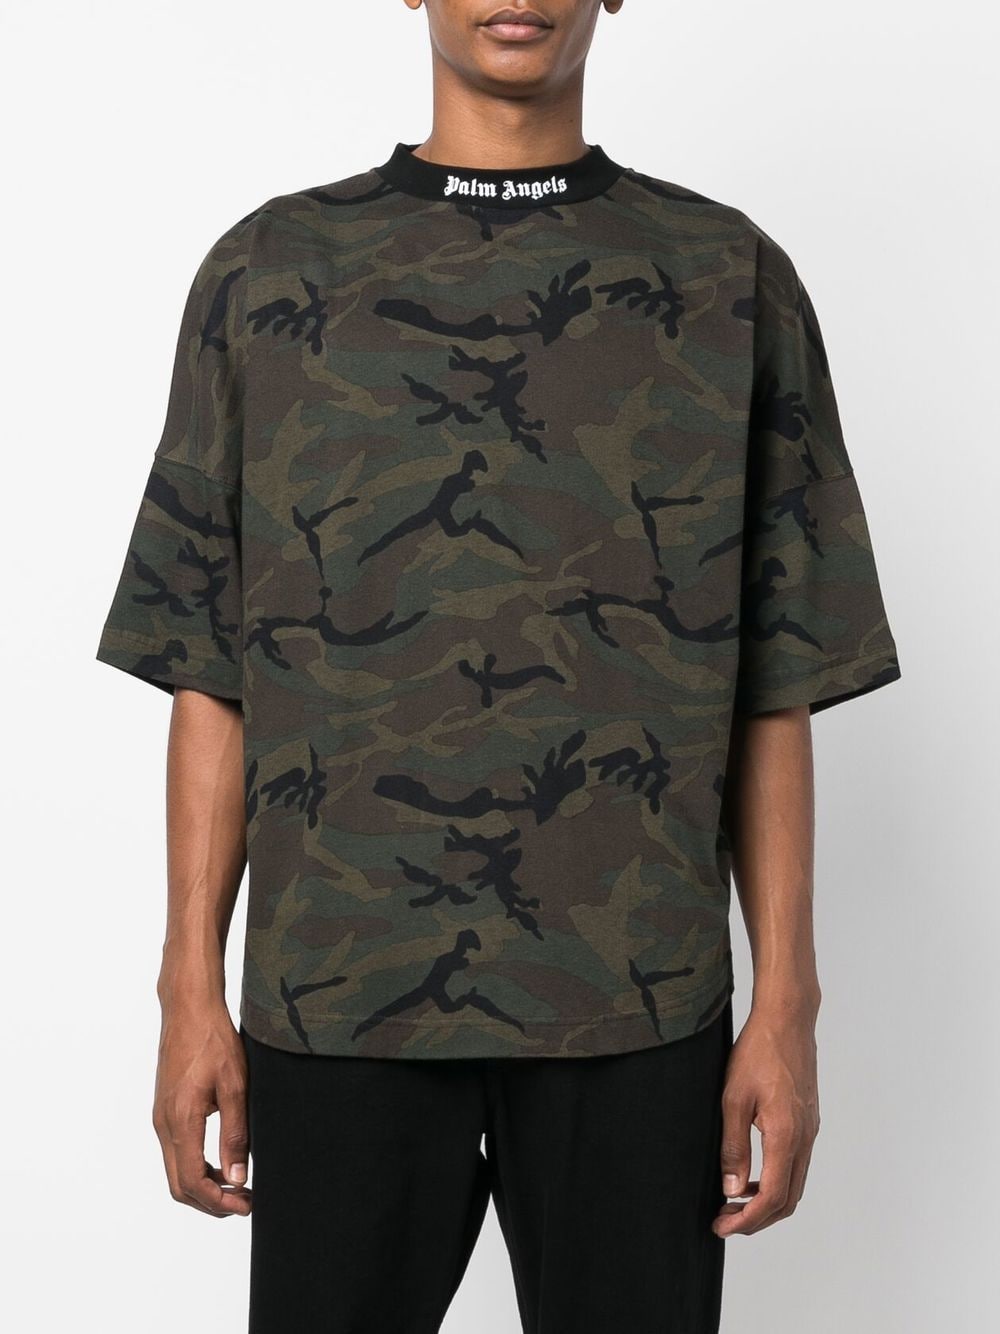 Palm Angels T-shirt Camouflage - Lothaire boutiques